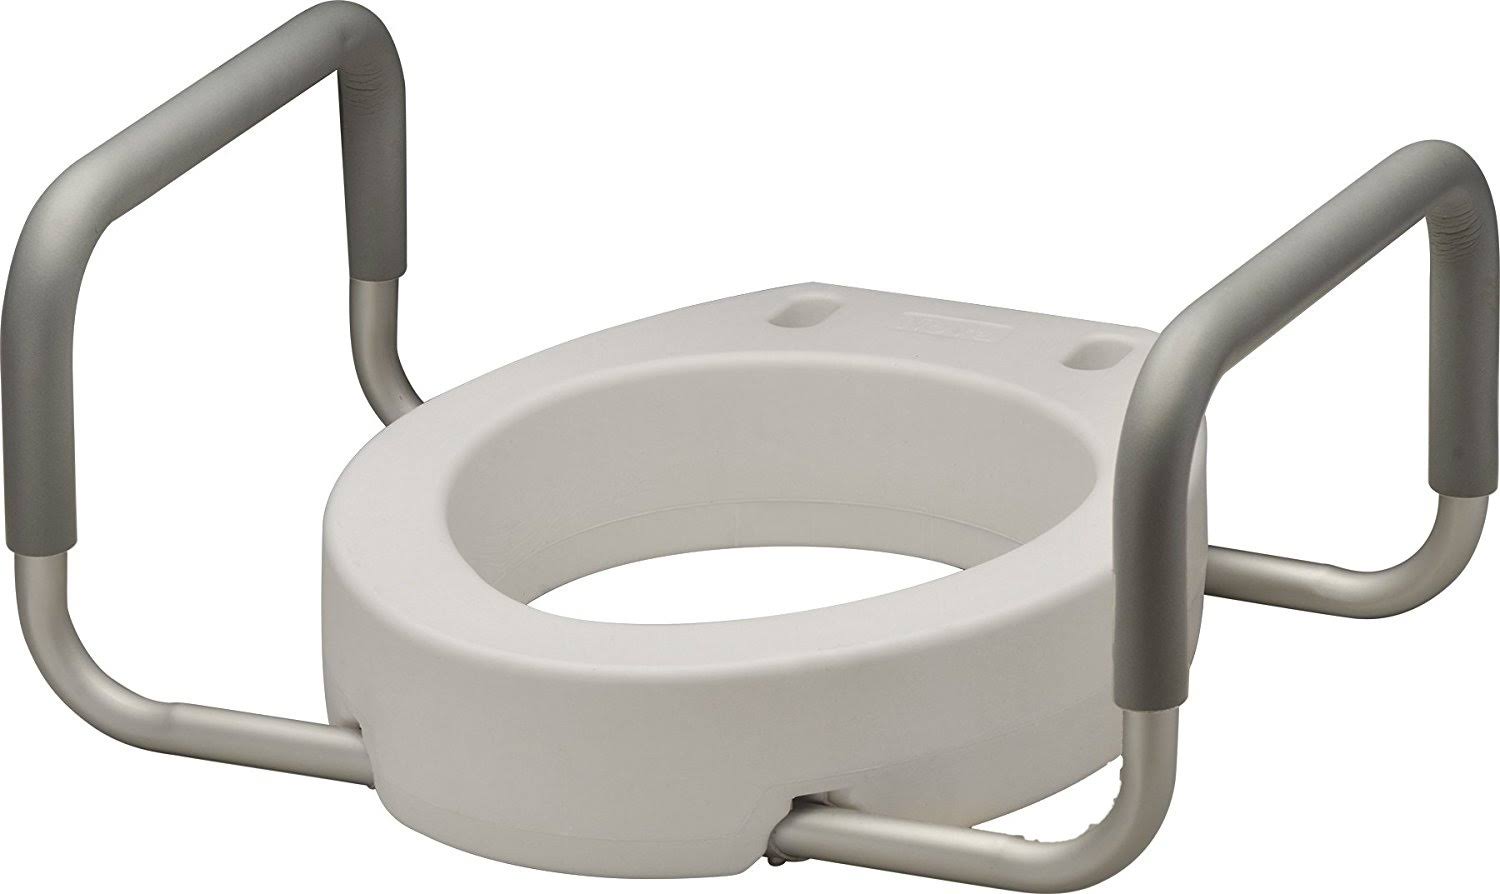 Nova Medical Products Toilet Seat Riser - White